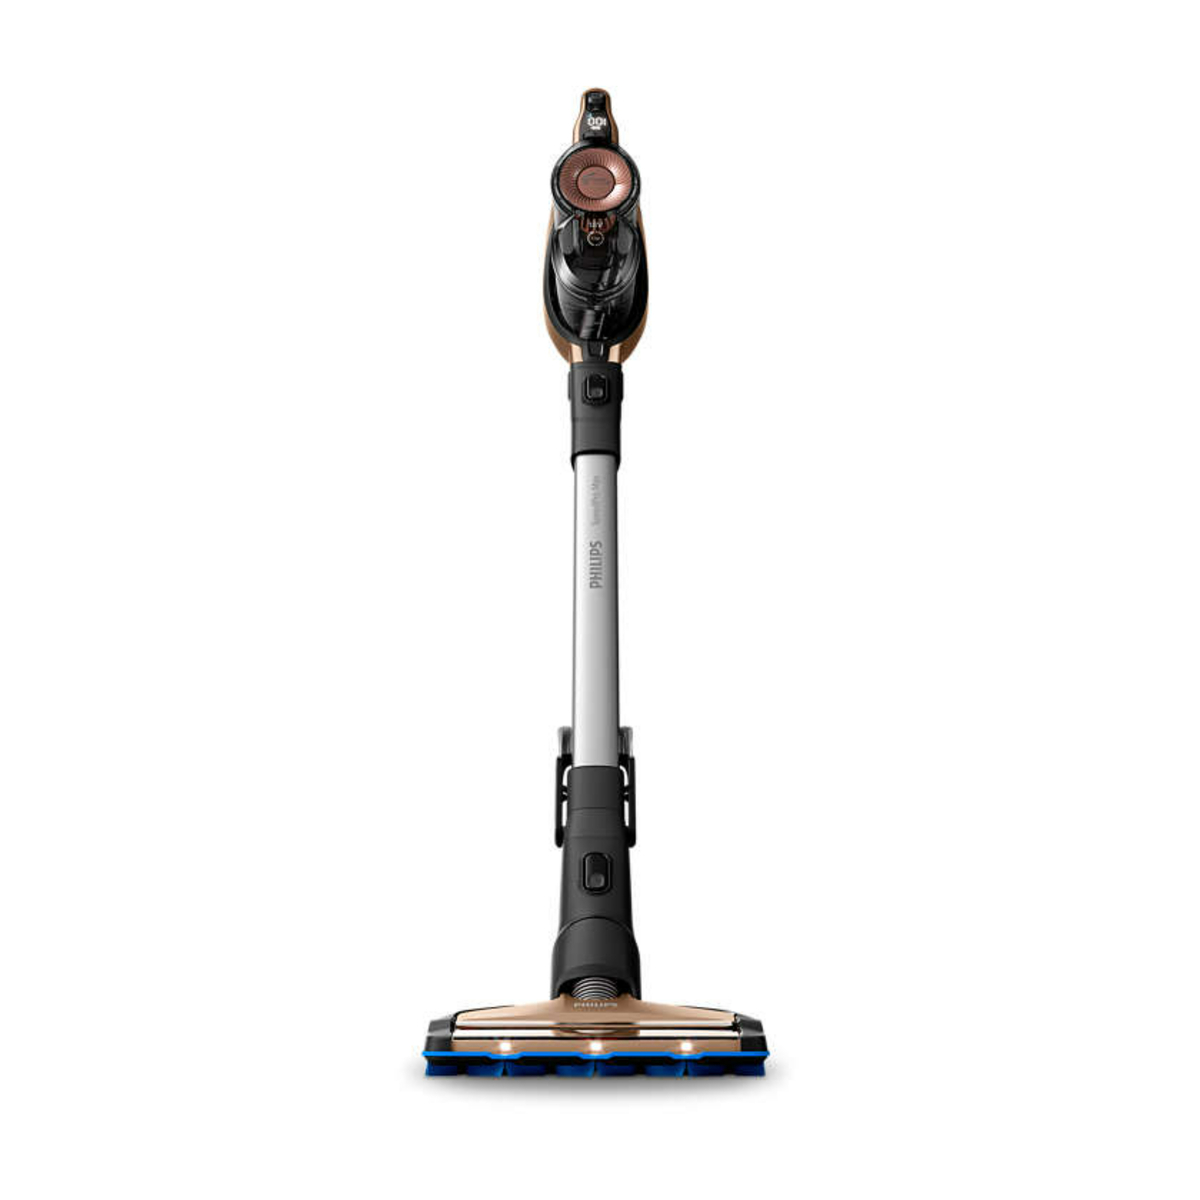 Philips SpeedPro Max Stick Vacuum Cleaner, Beluga Silver, XC7041/01